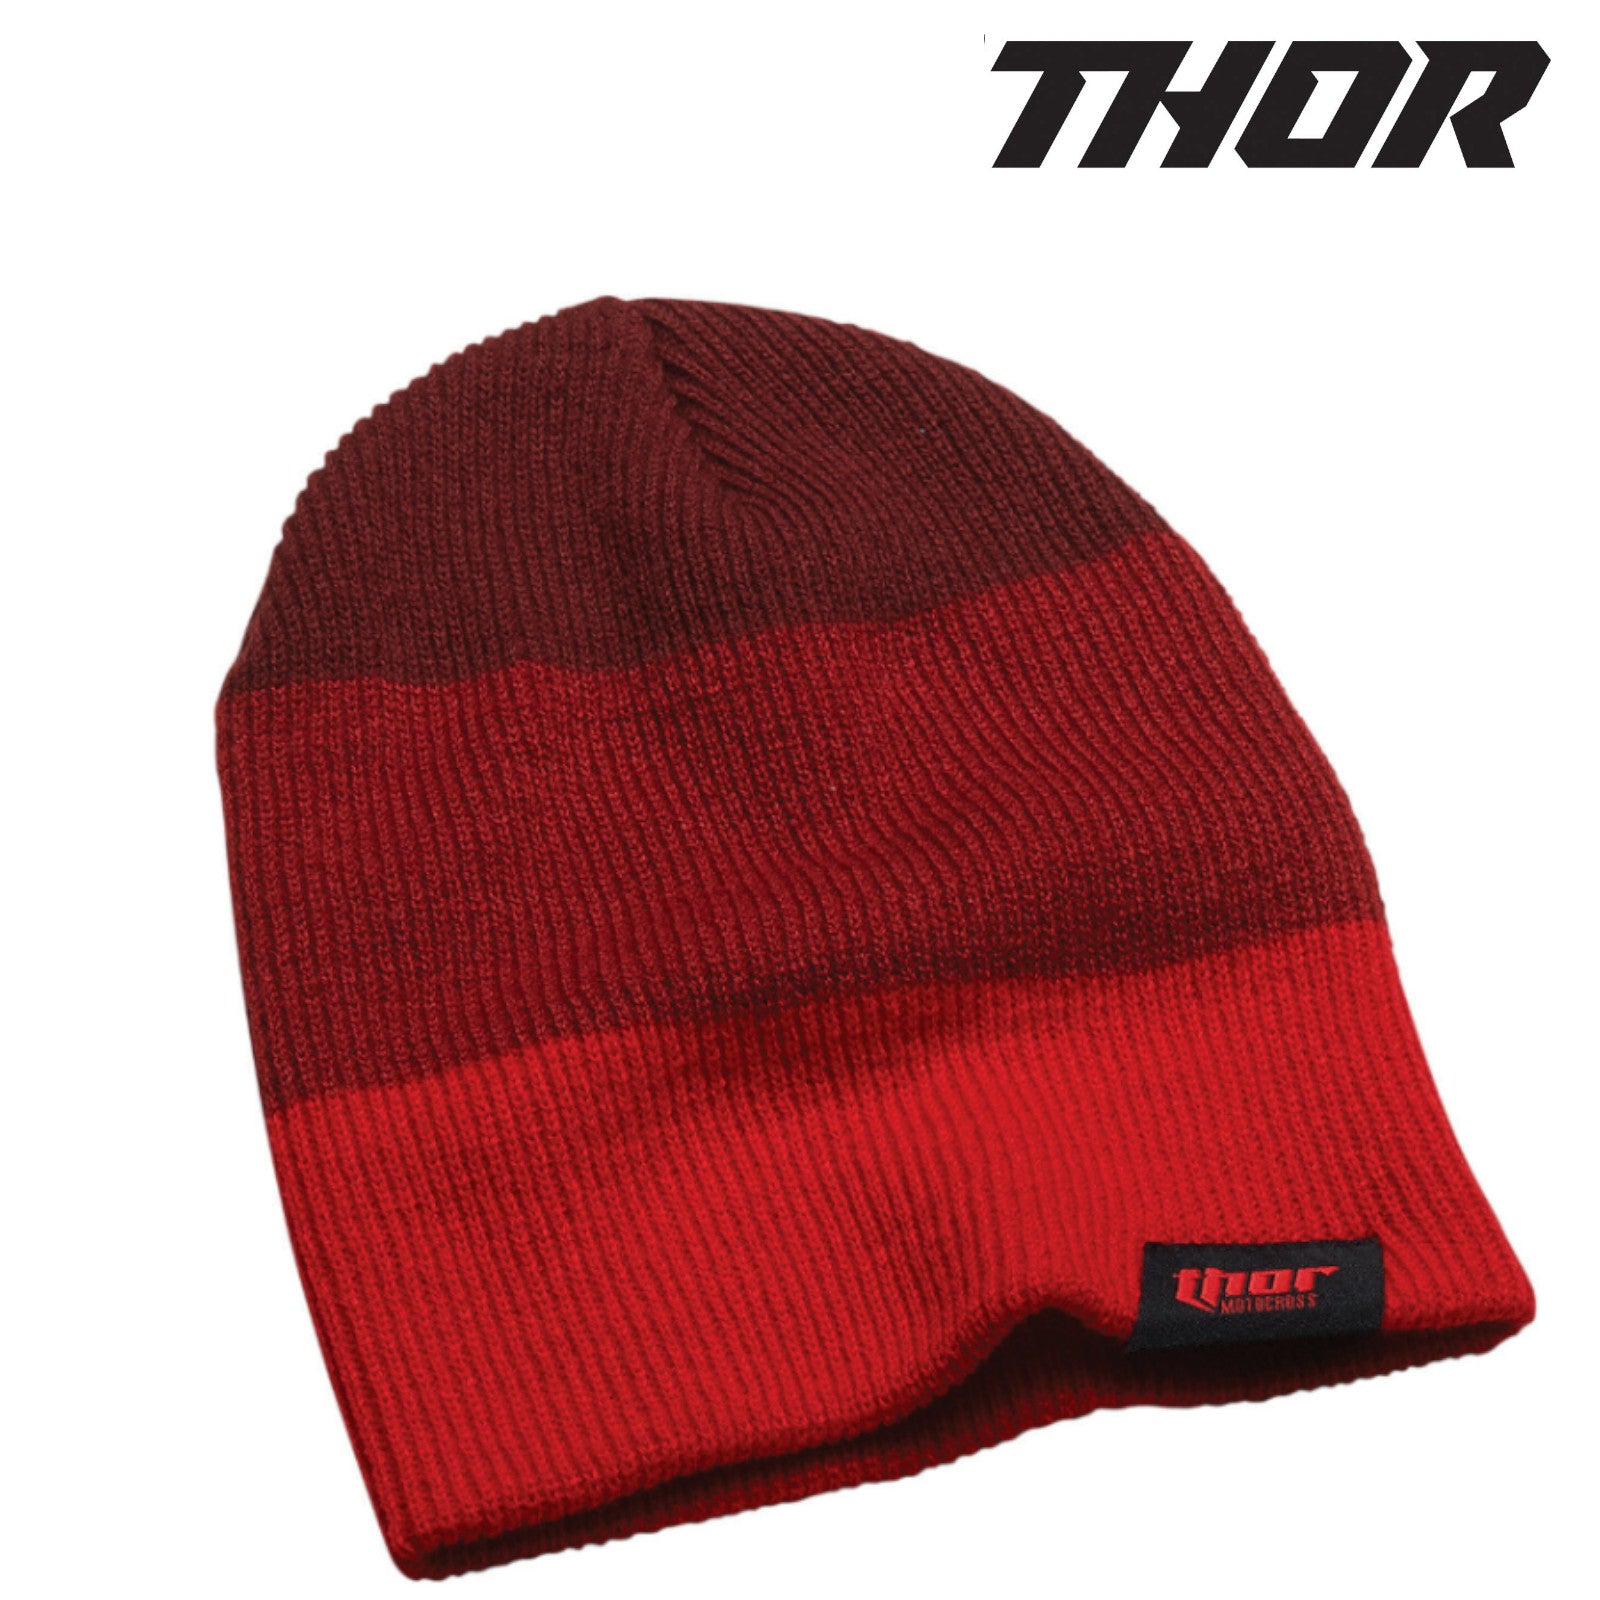 Thor Beanie Red Beanie Hat Alternate 2